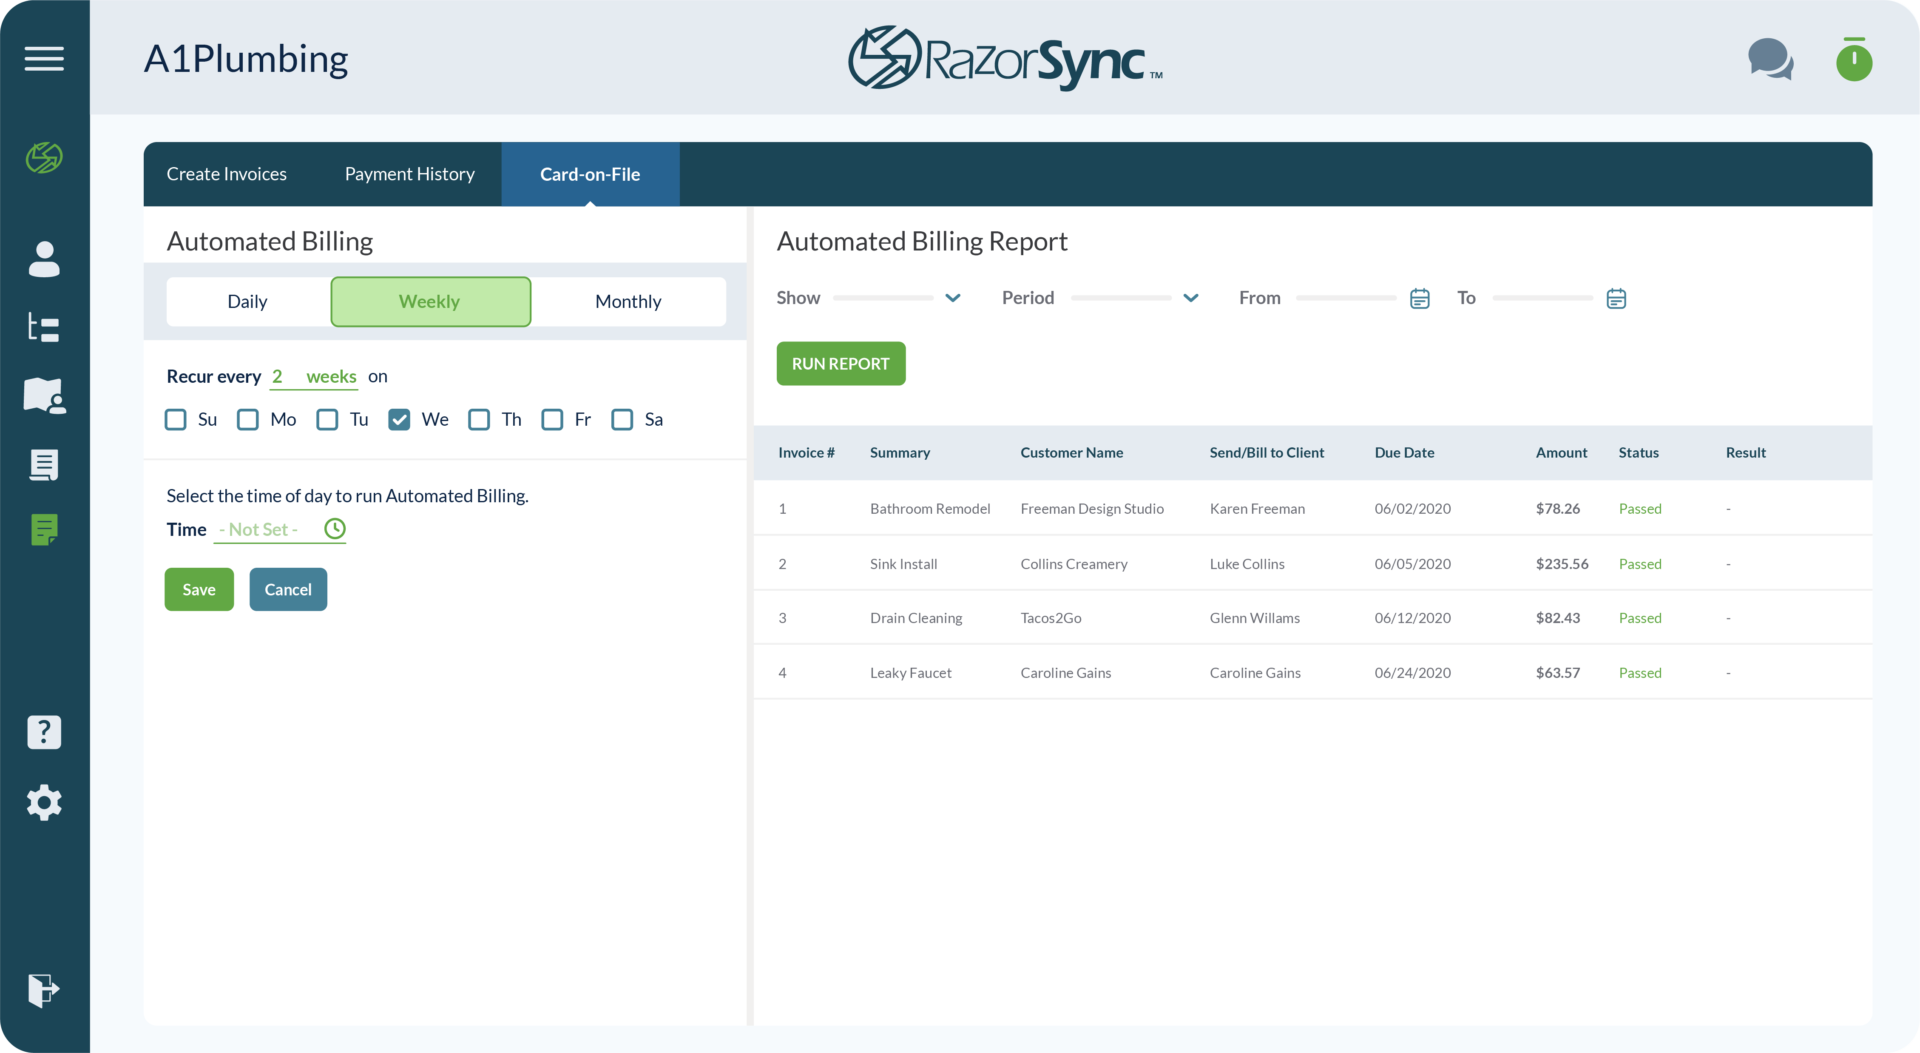 razorsync app screen with automated billing portal